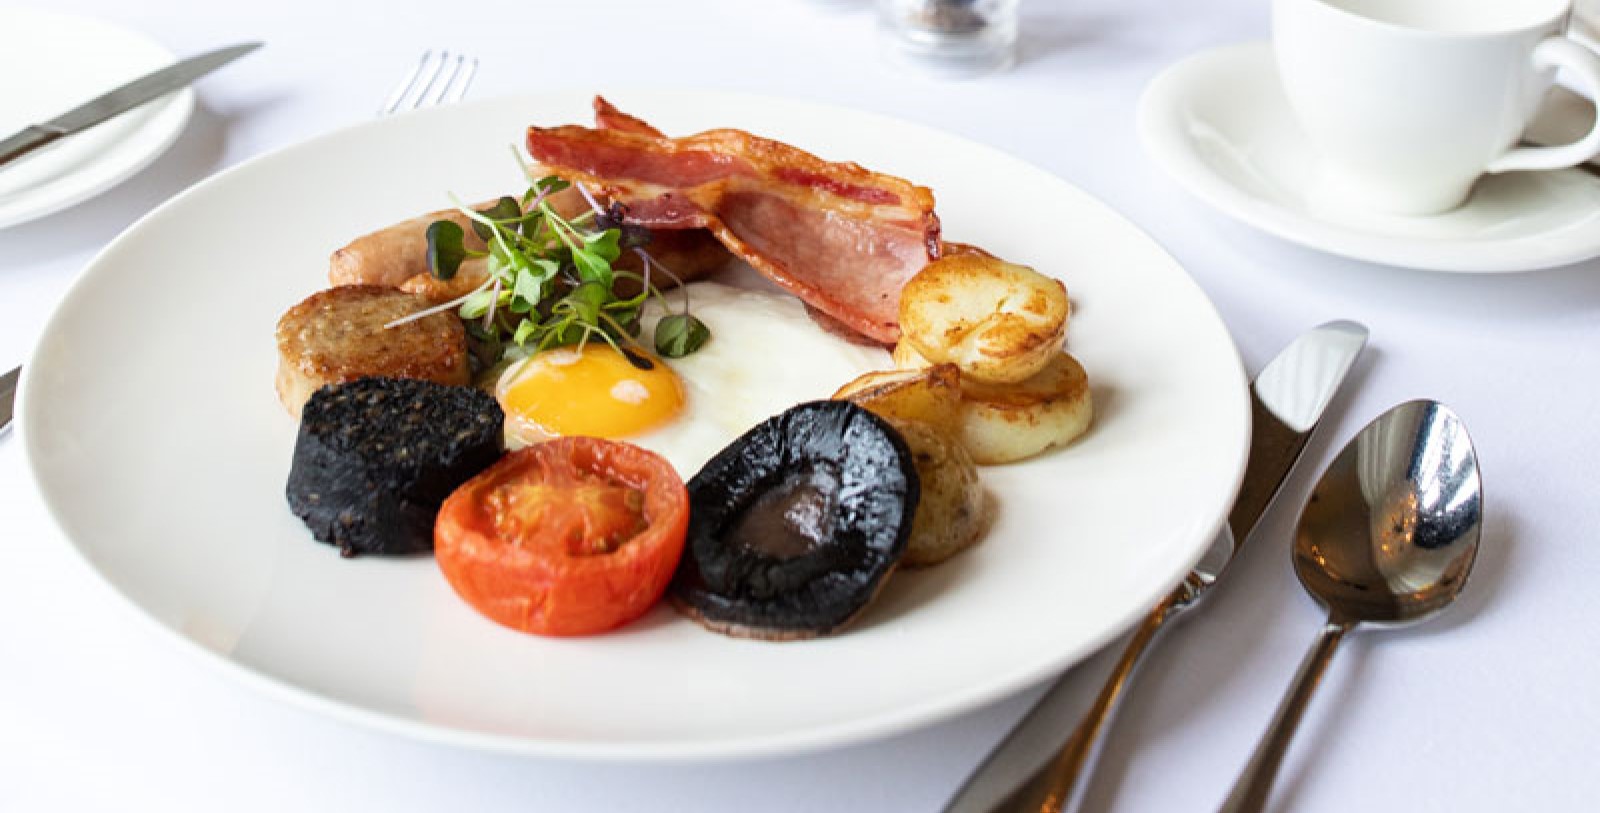 Taste Kilkea Castle's take on a traditional Irish breakfast before traveling around County Kildare.